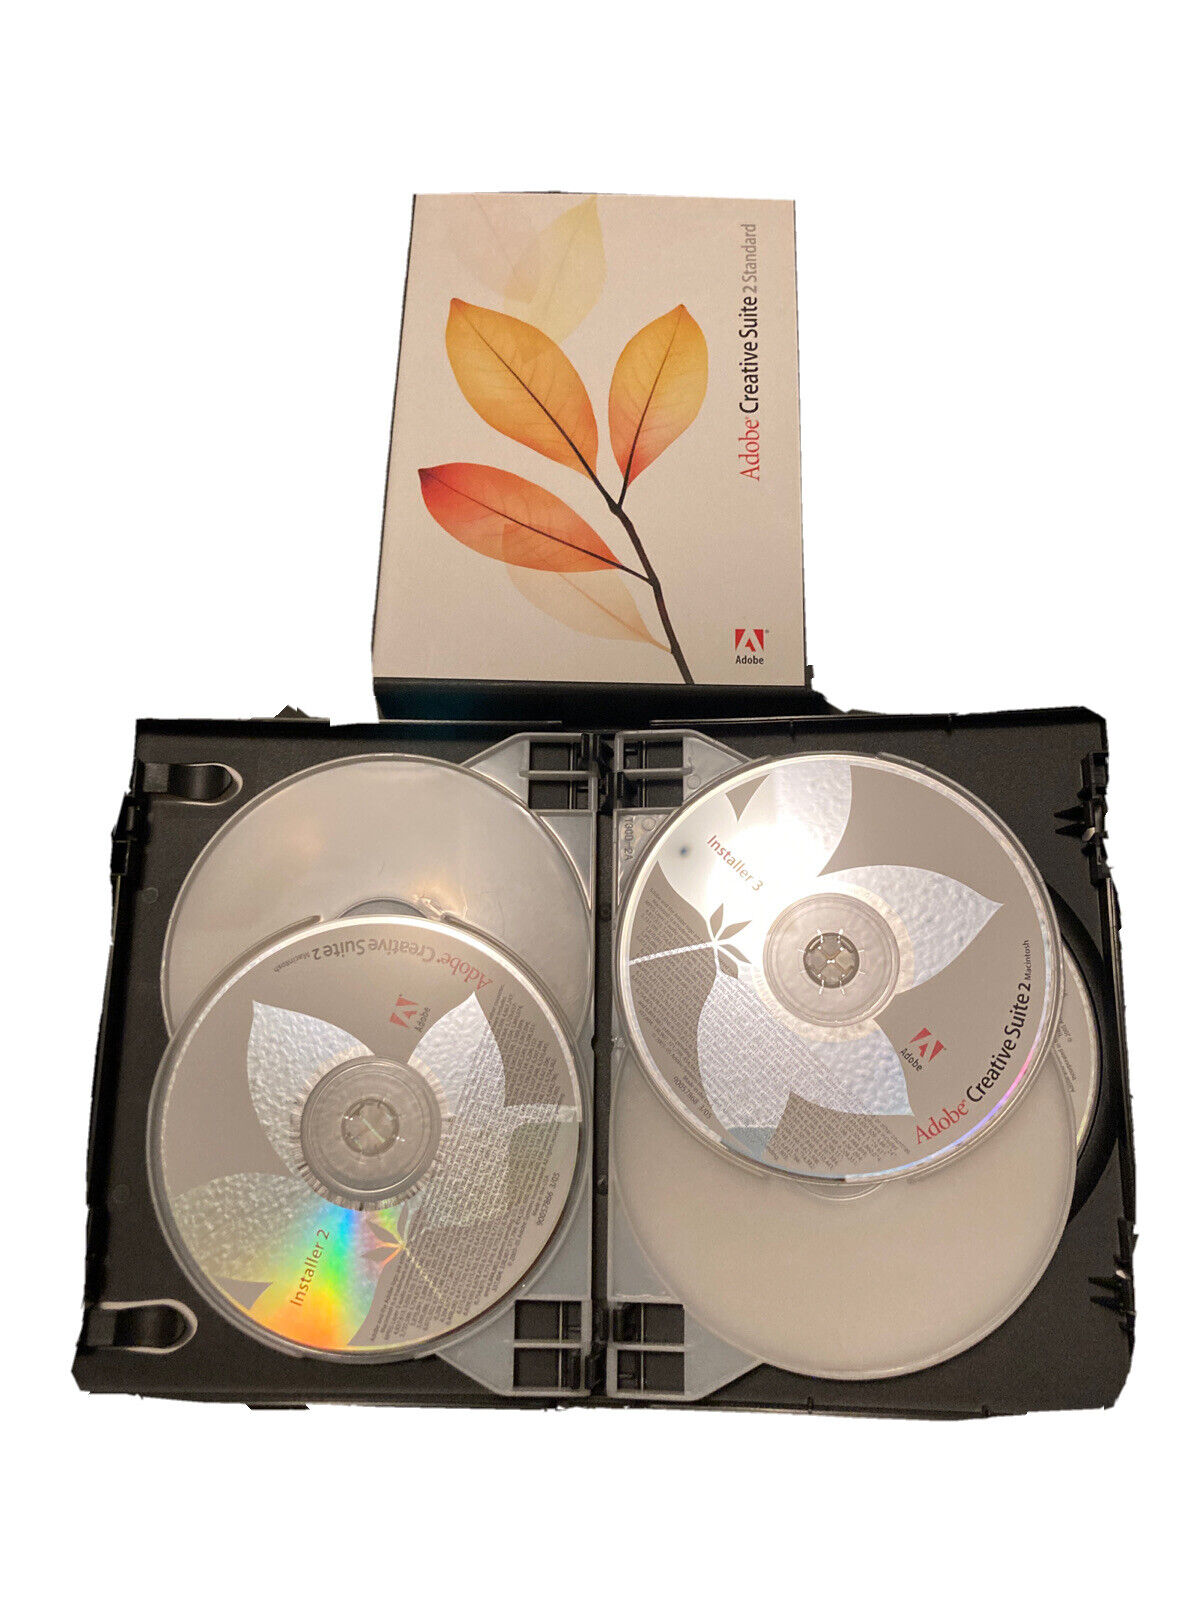 Adobe Creative Suite 2 CS2 Mac Standard with 5 DISC - Vintage NOS | eBay